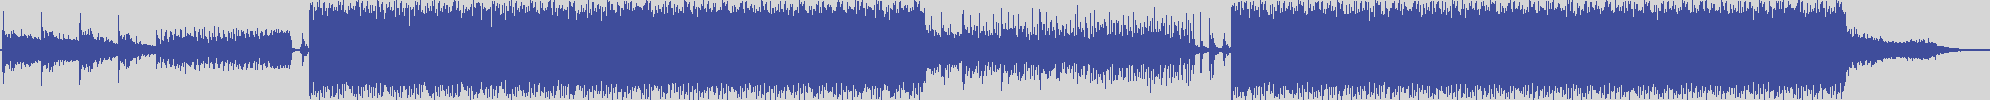 nf_boyz_records [NFY022] Leonhard Navarro - Syncopatik [Reflex Mix] audio wave form